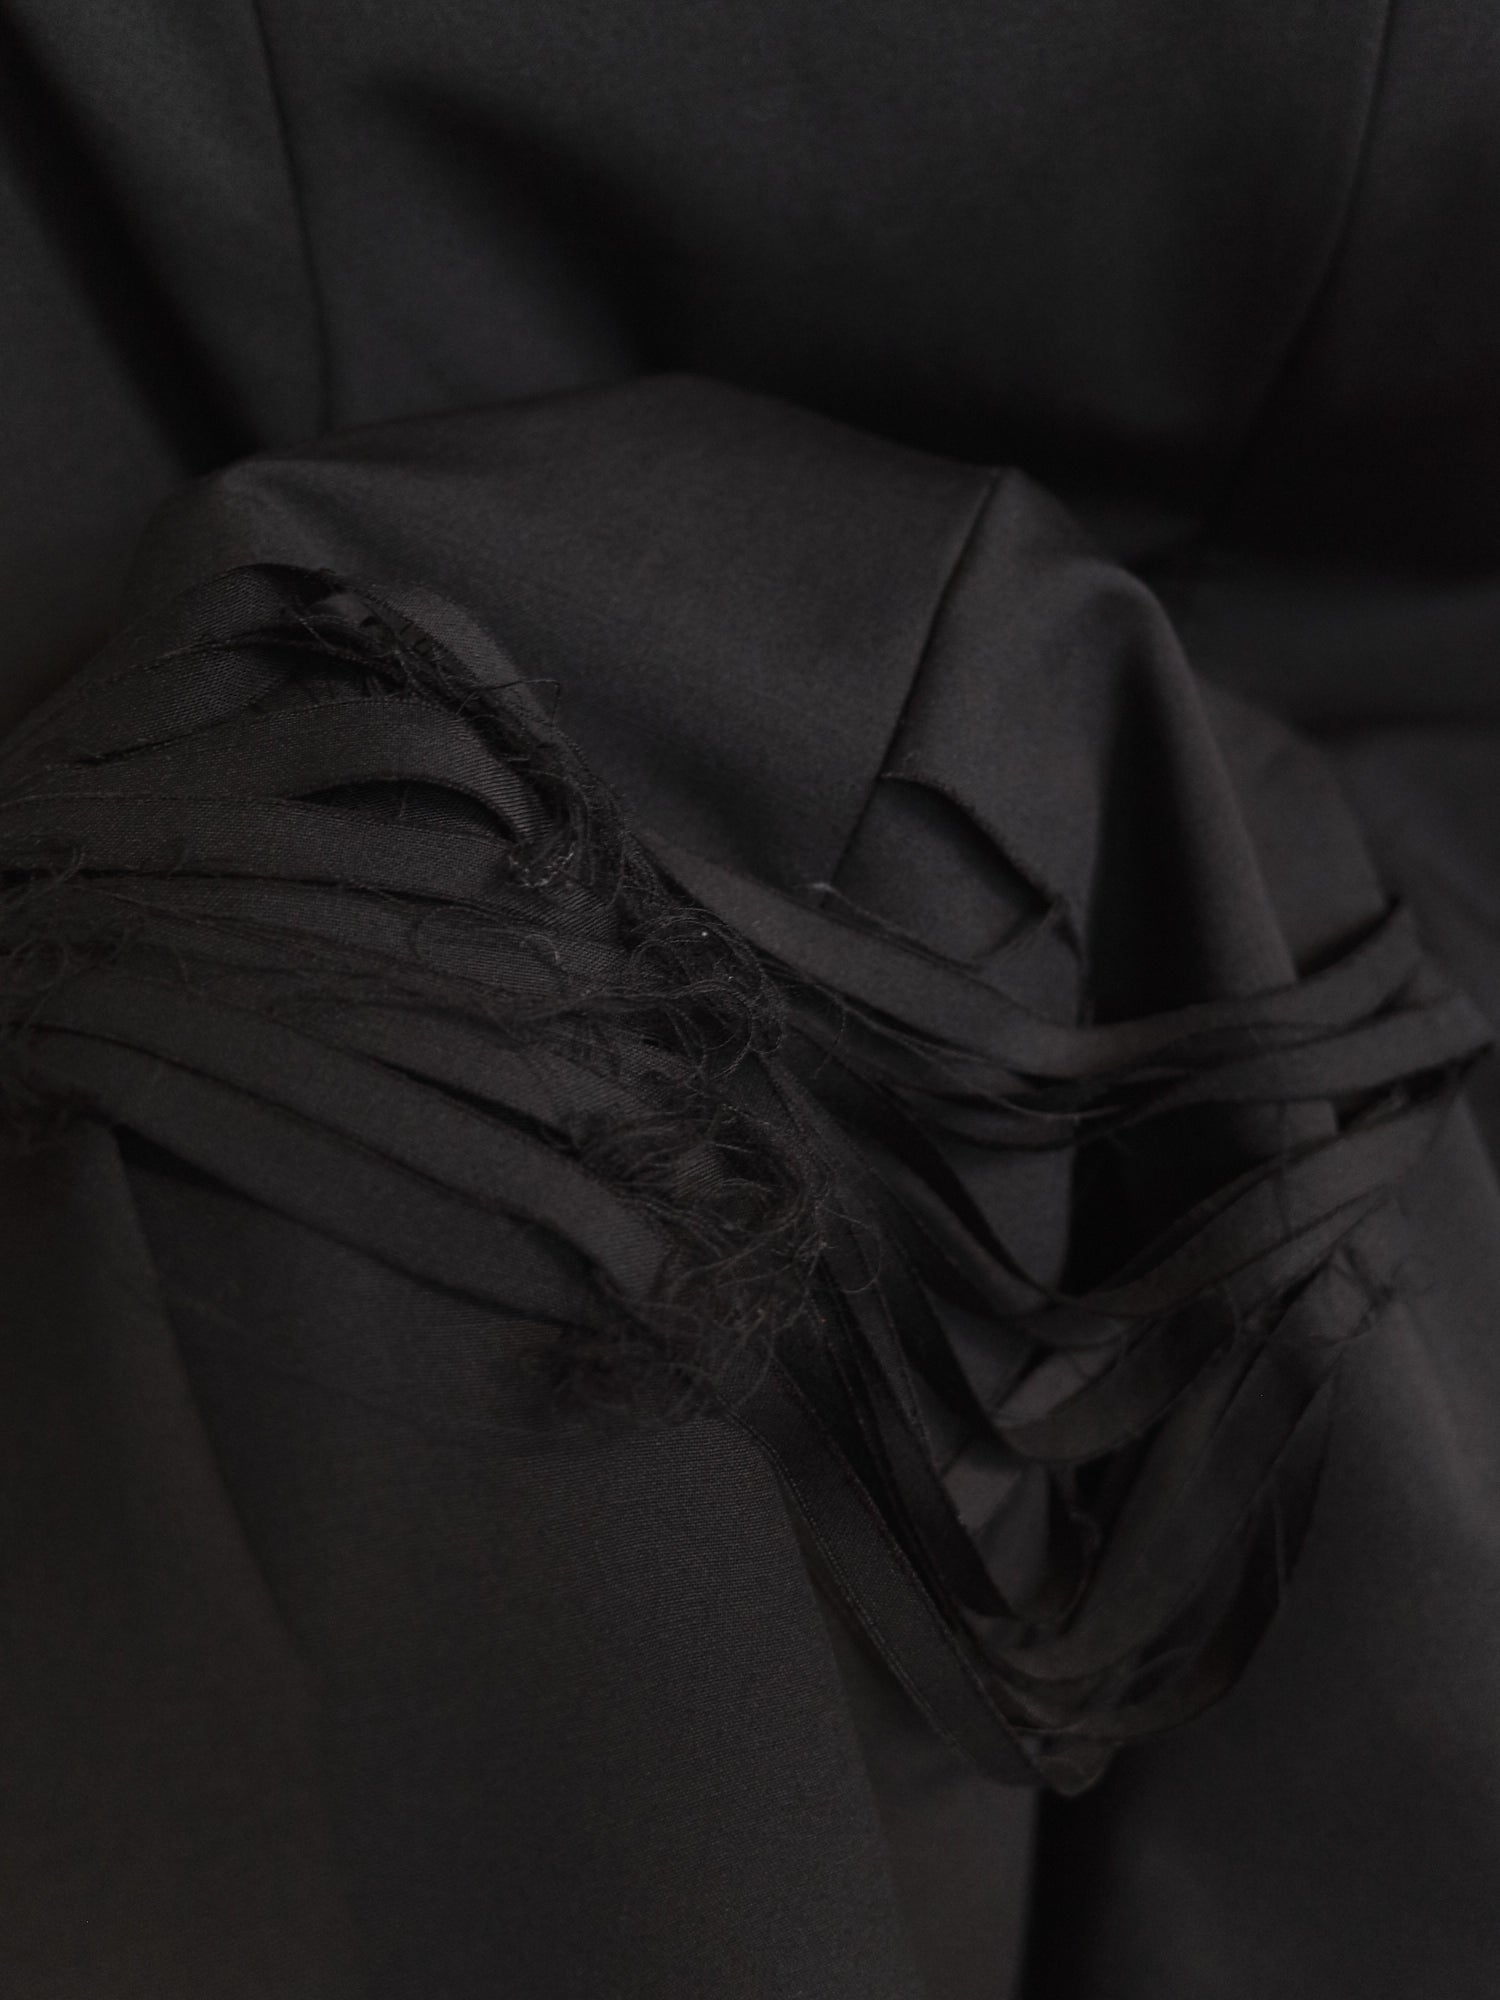 Veronique Branquinho black wool raw edge cut fabric half sleeve dress - size 36